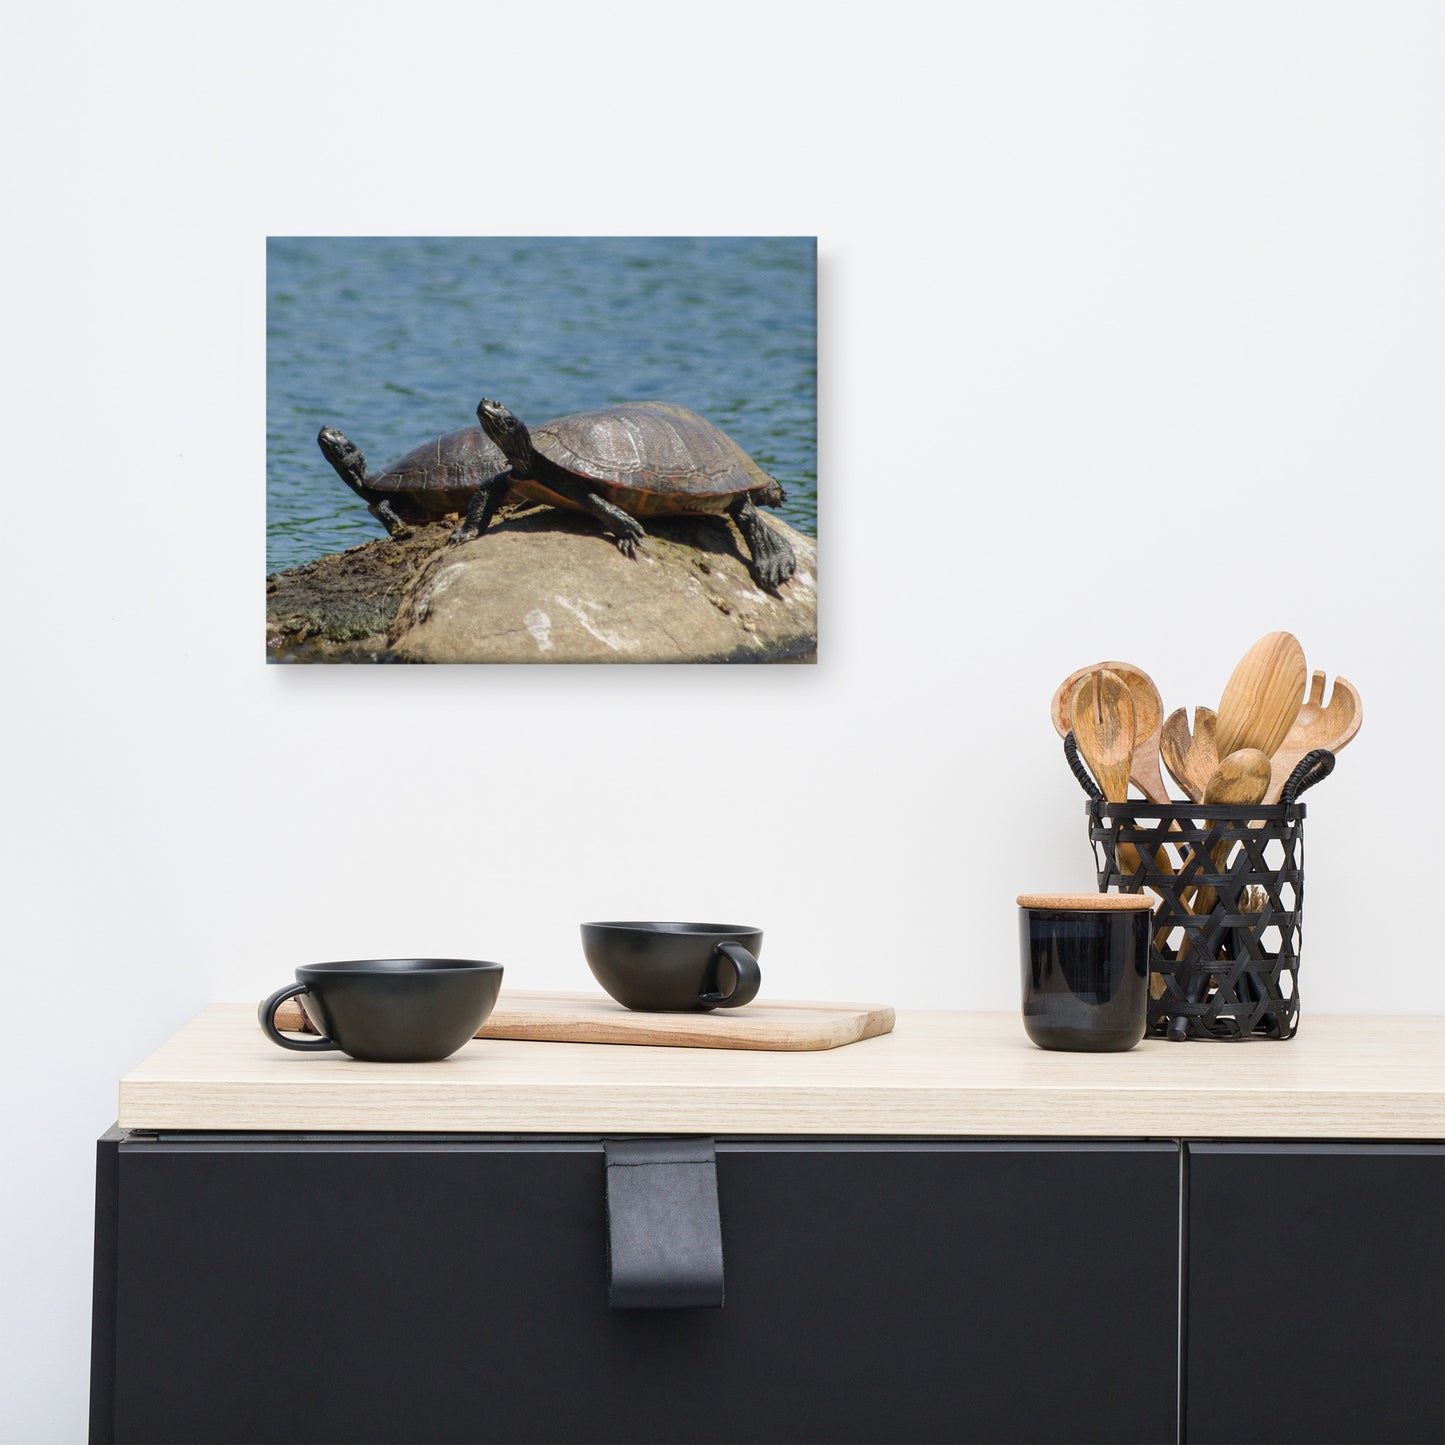 Sunshine Rock with Turtles Animal / Wildlife Photograph Canvas Wall Art Prints